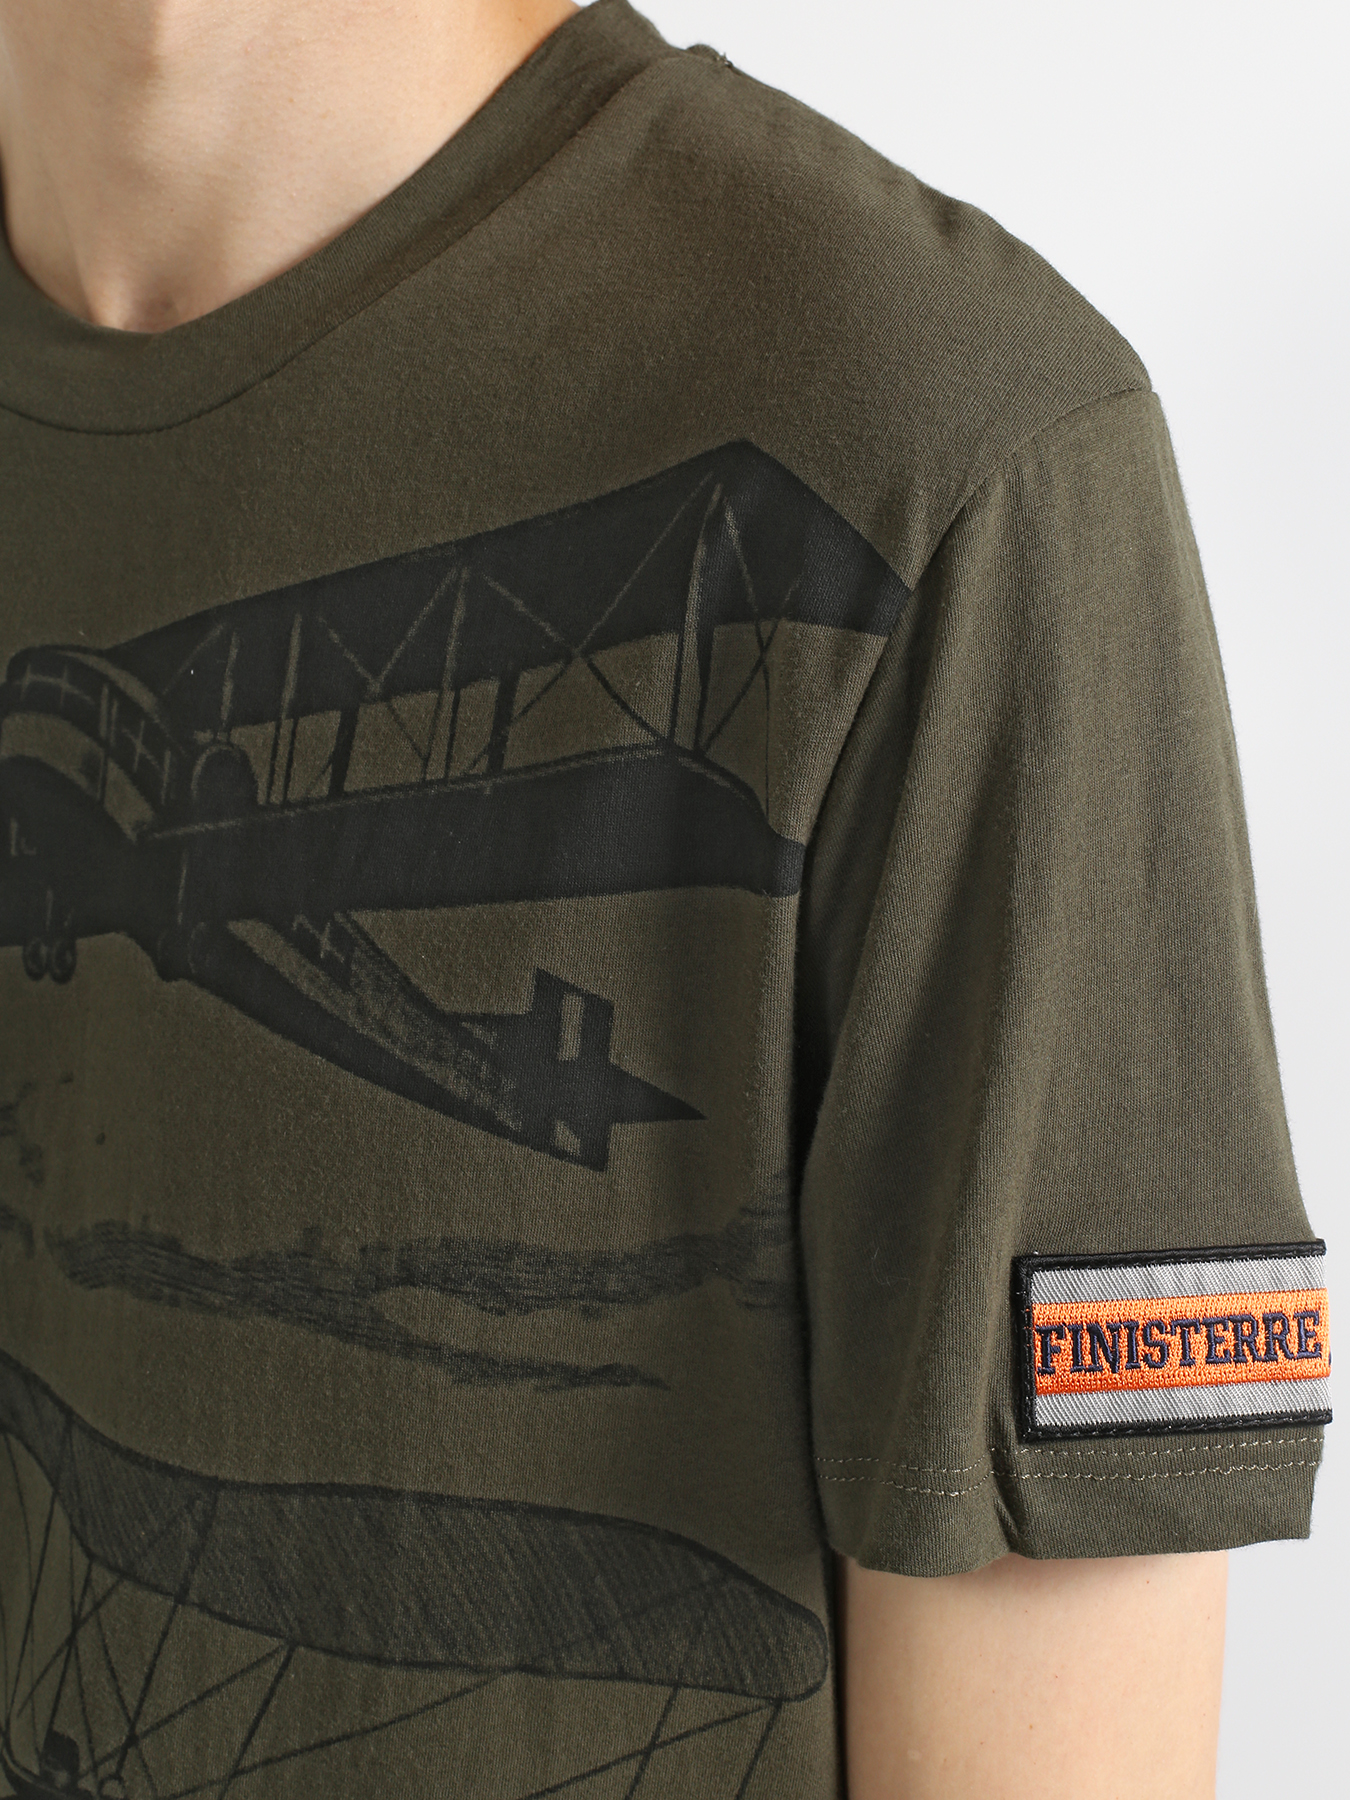 Finisterre Force Хлопковая футболка 345087-030 Фото 3